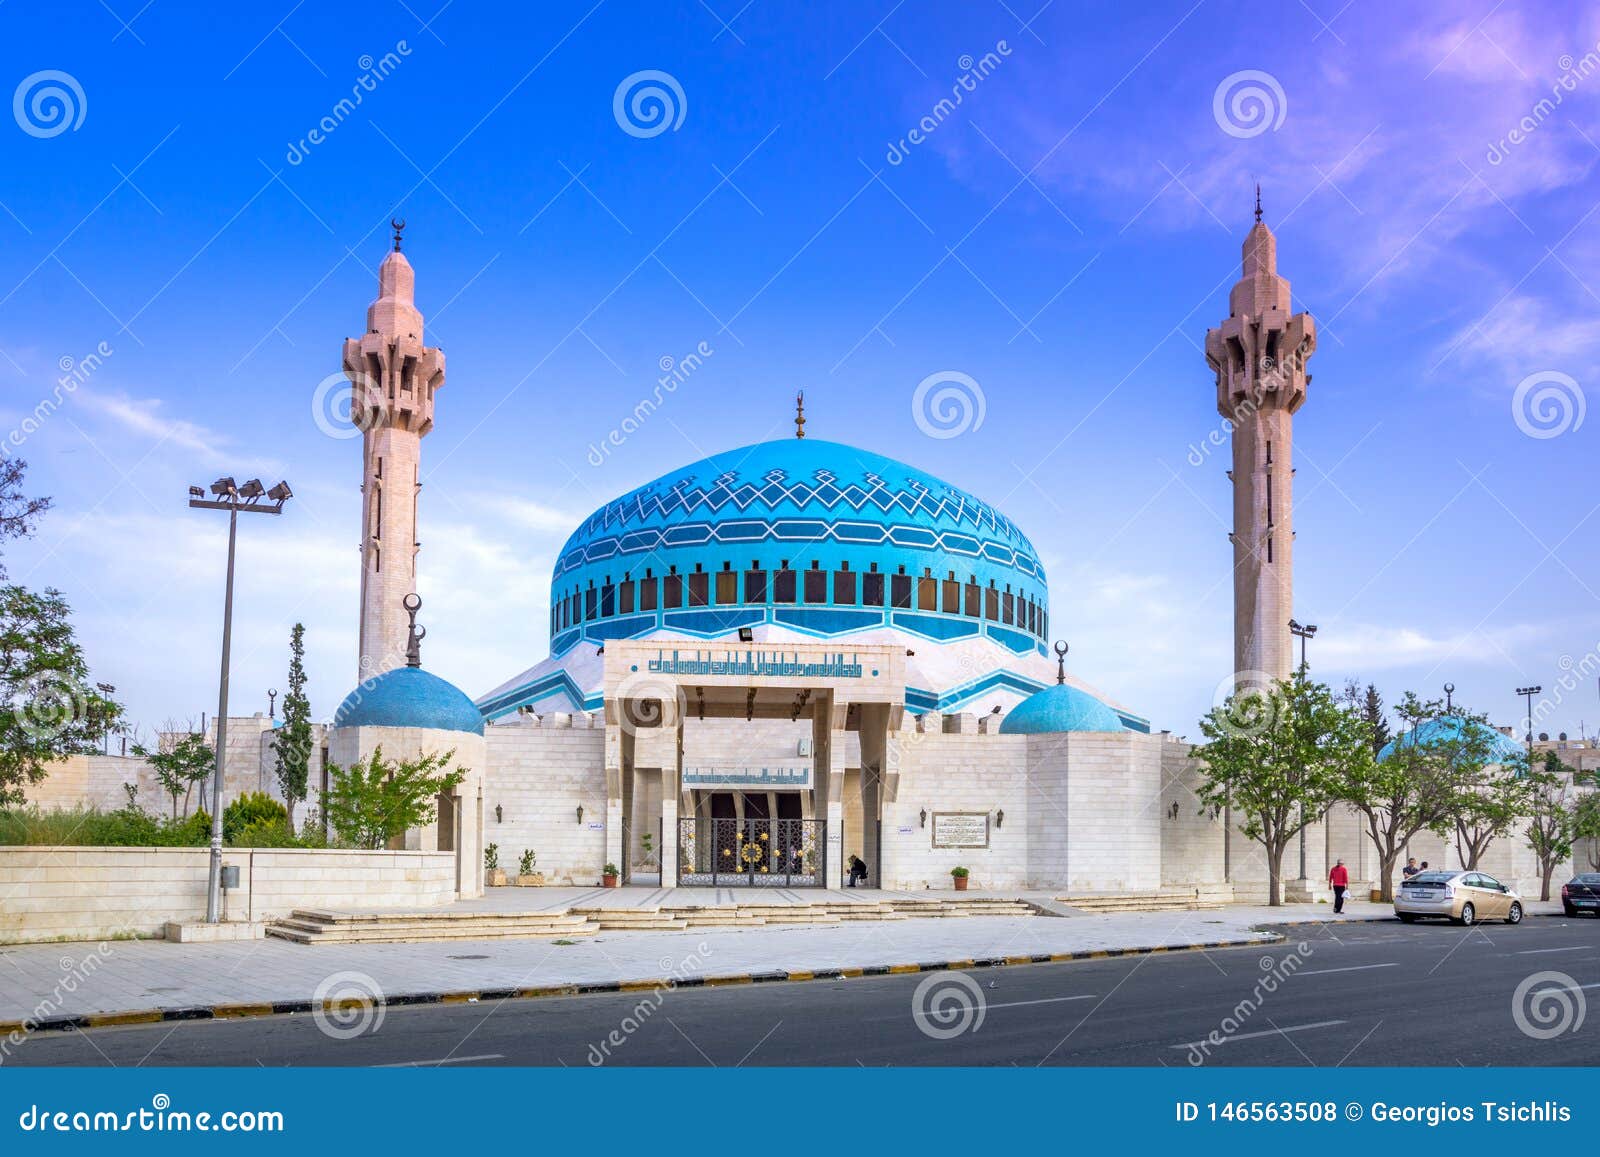 king abdullah mosque amman opening hours